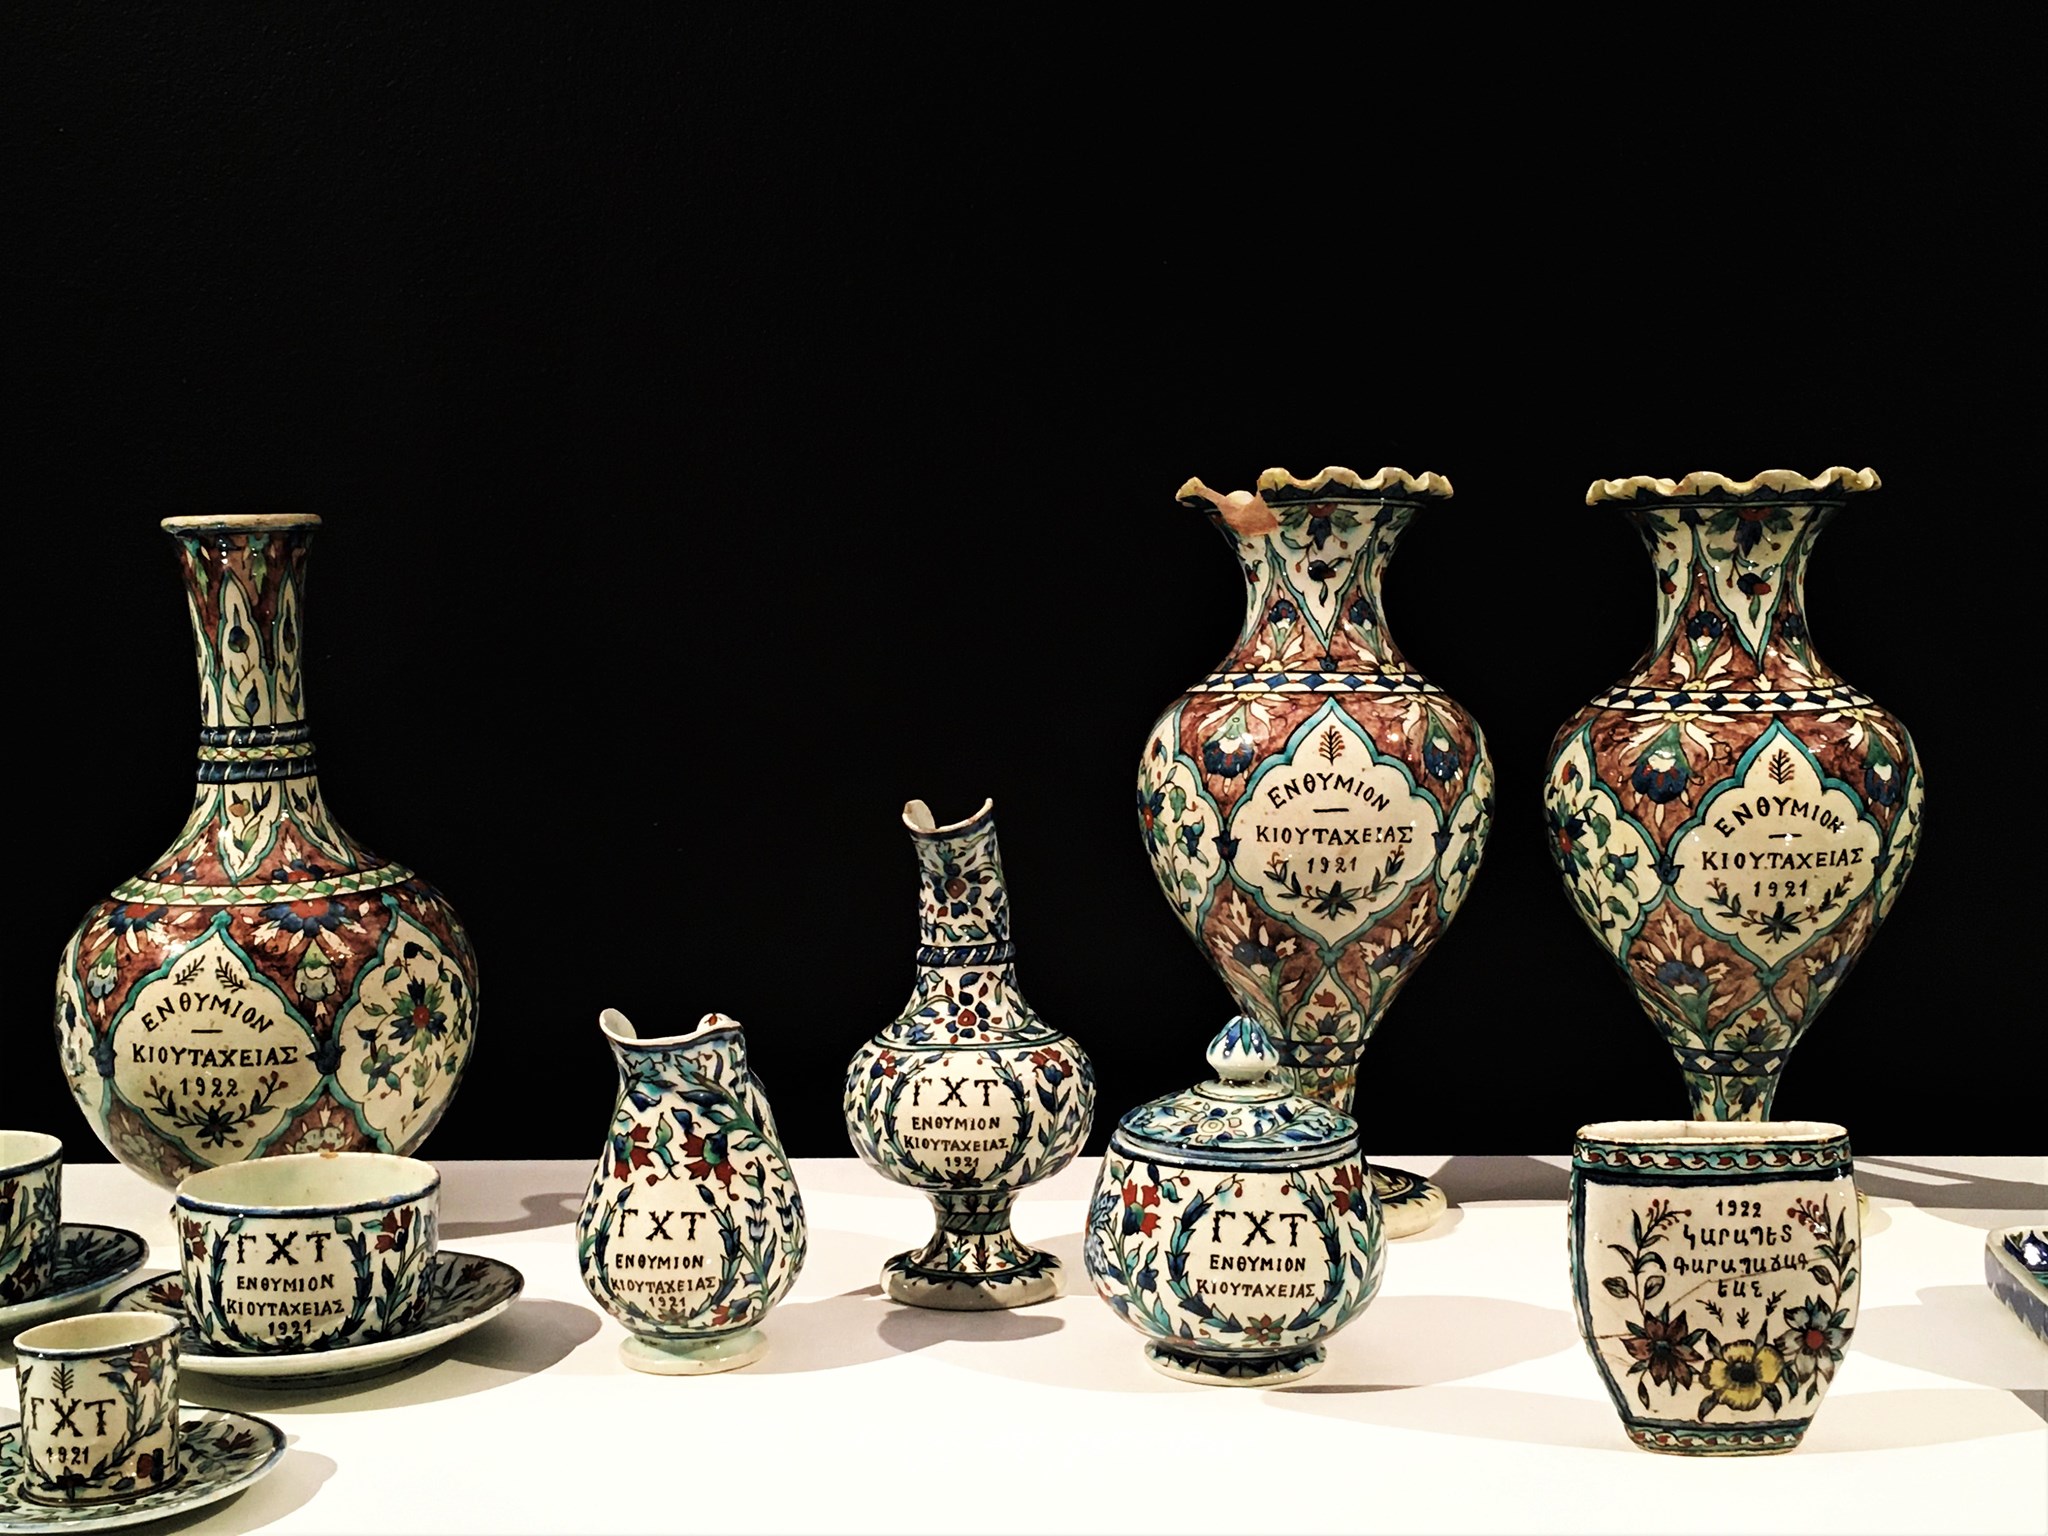 Kutahya ceramics with Greek inscriptions